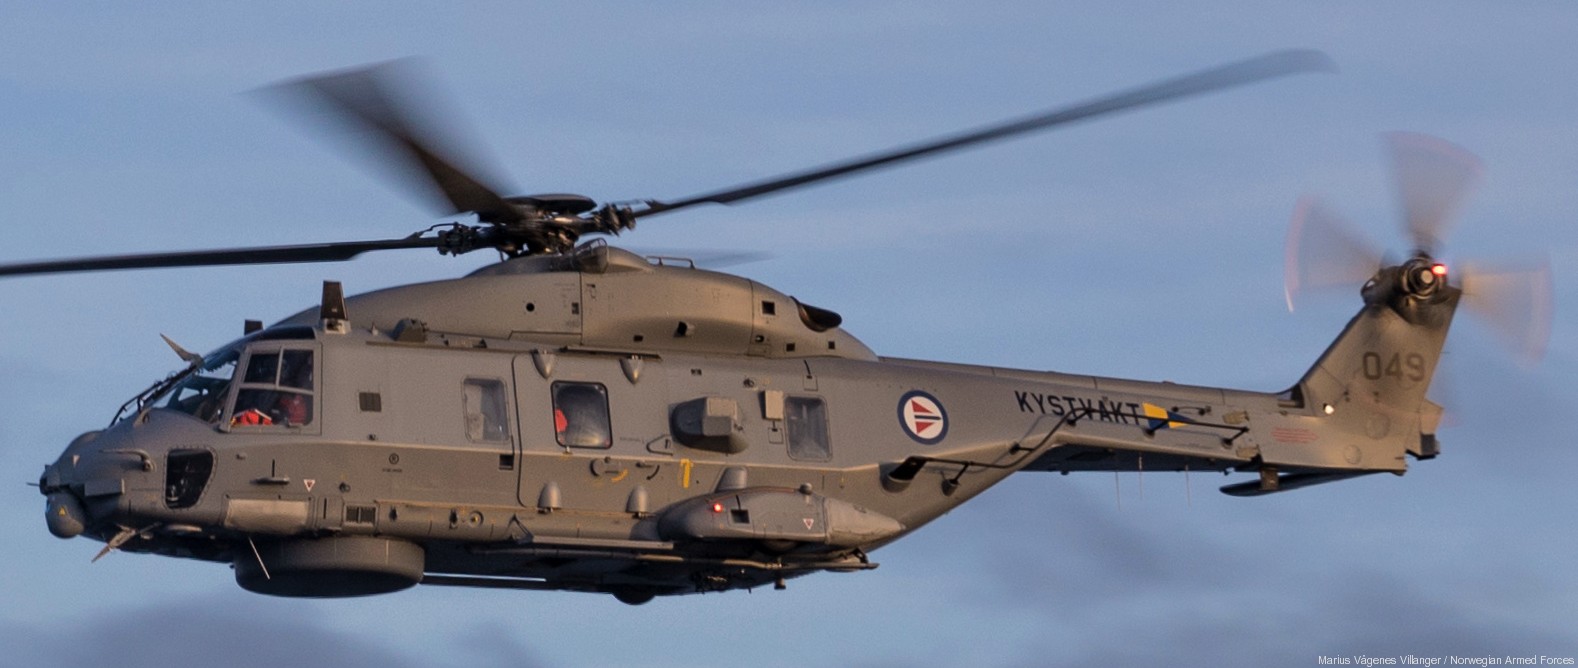 nh90 nfh asw helicopter royal norwegian coast guard navy air force kystvakt sjoforsvaret 049 02